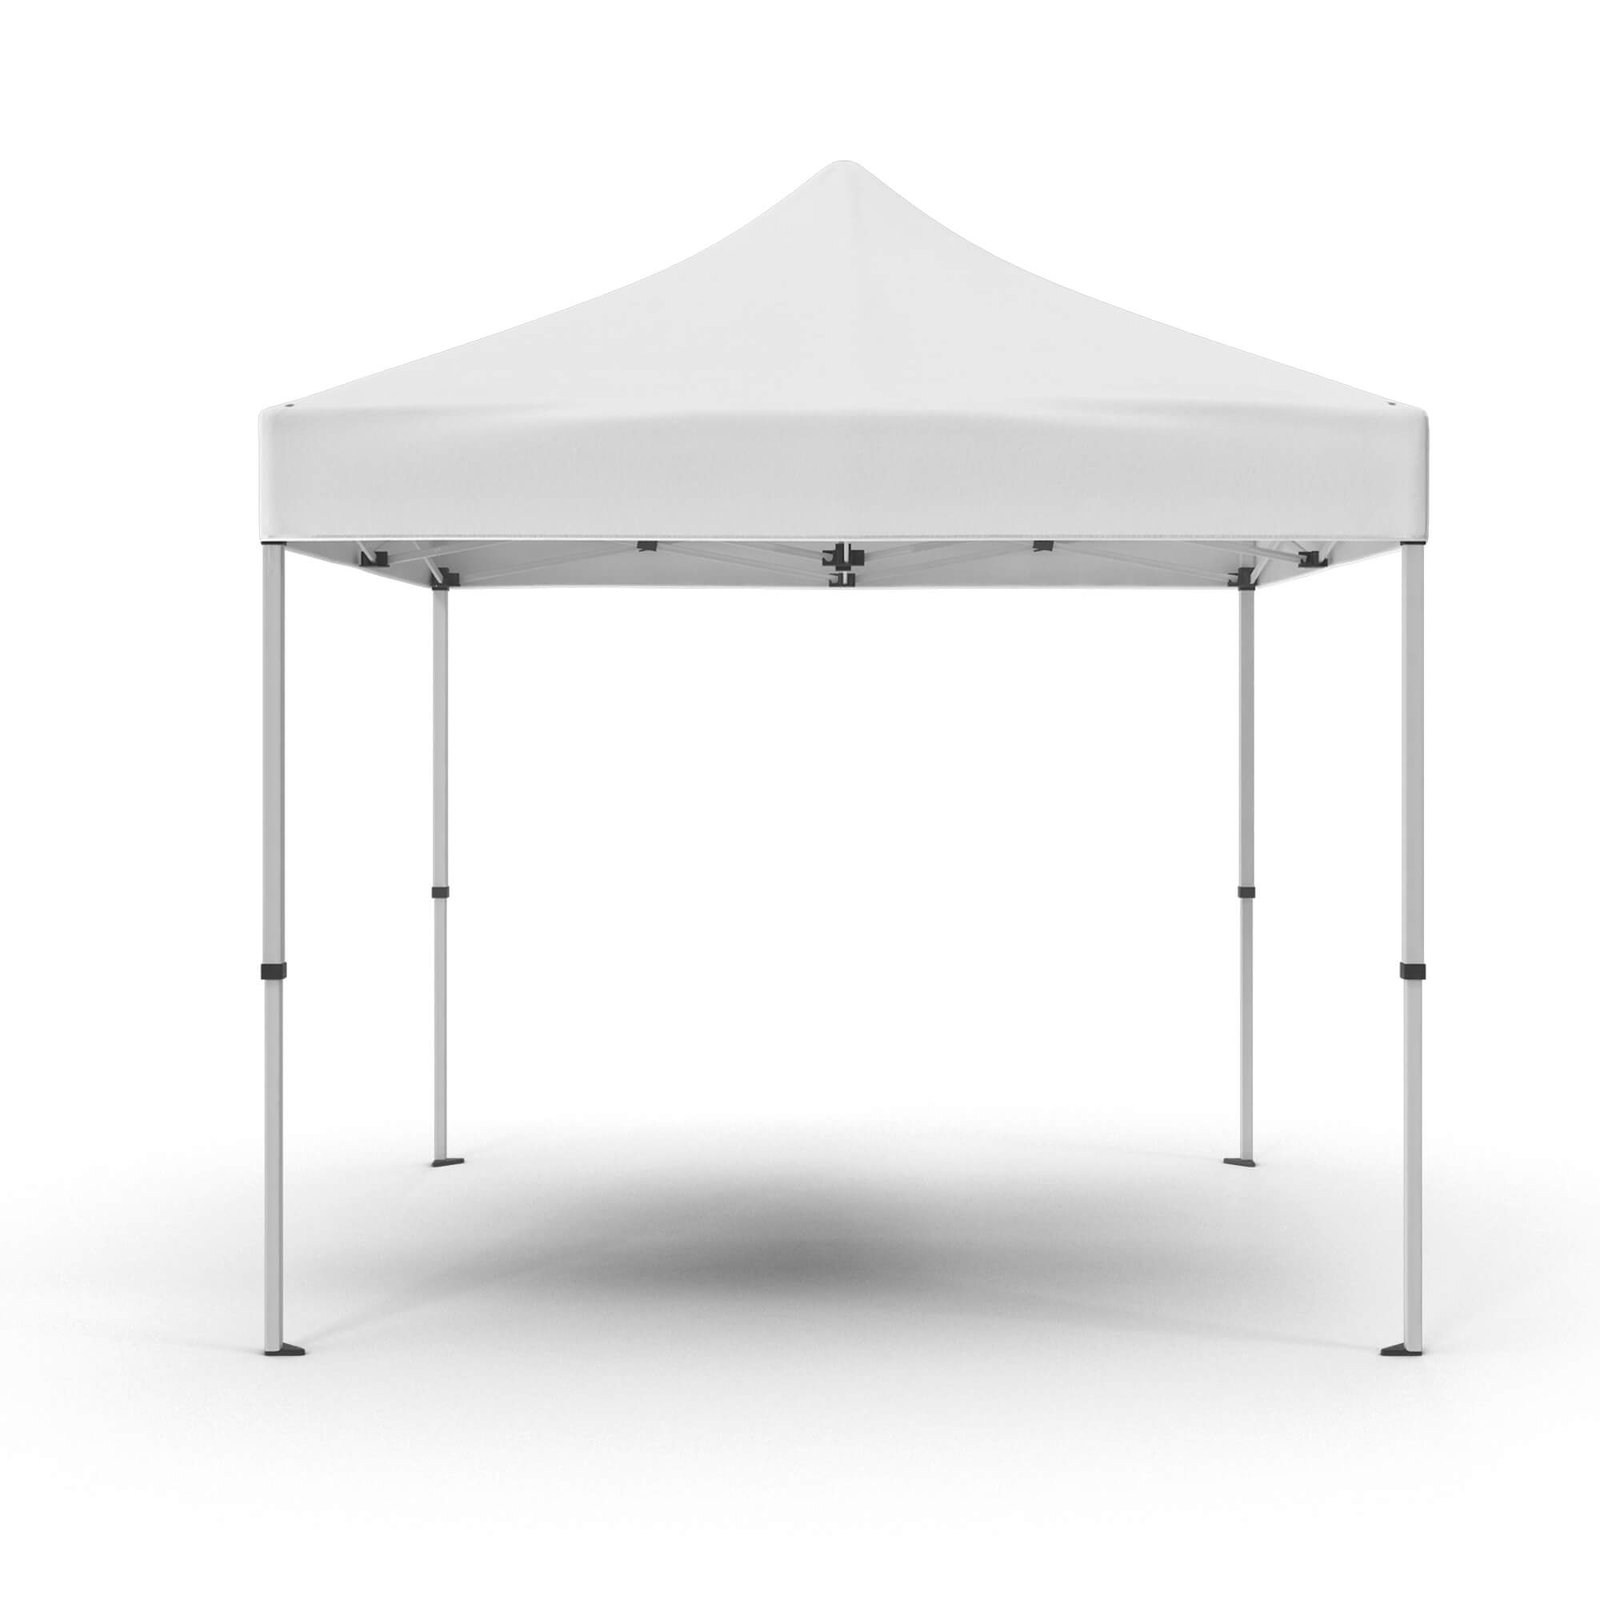 Blank Free Tent Mockup PSD Template